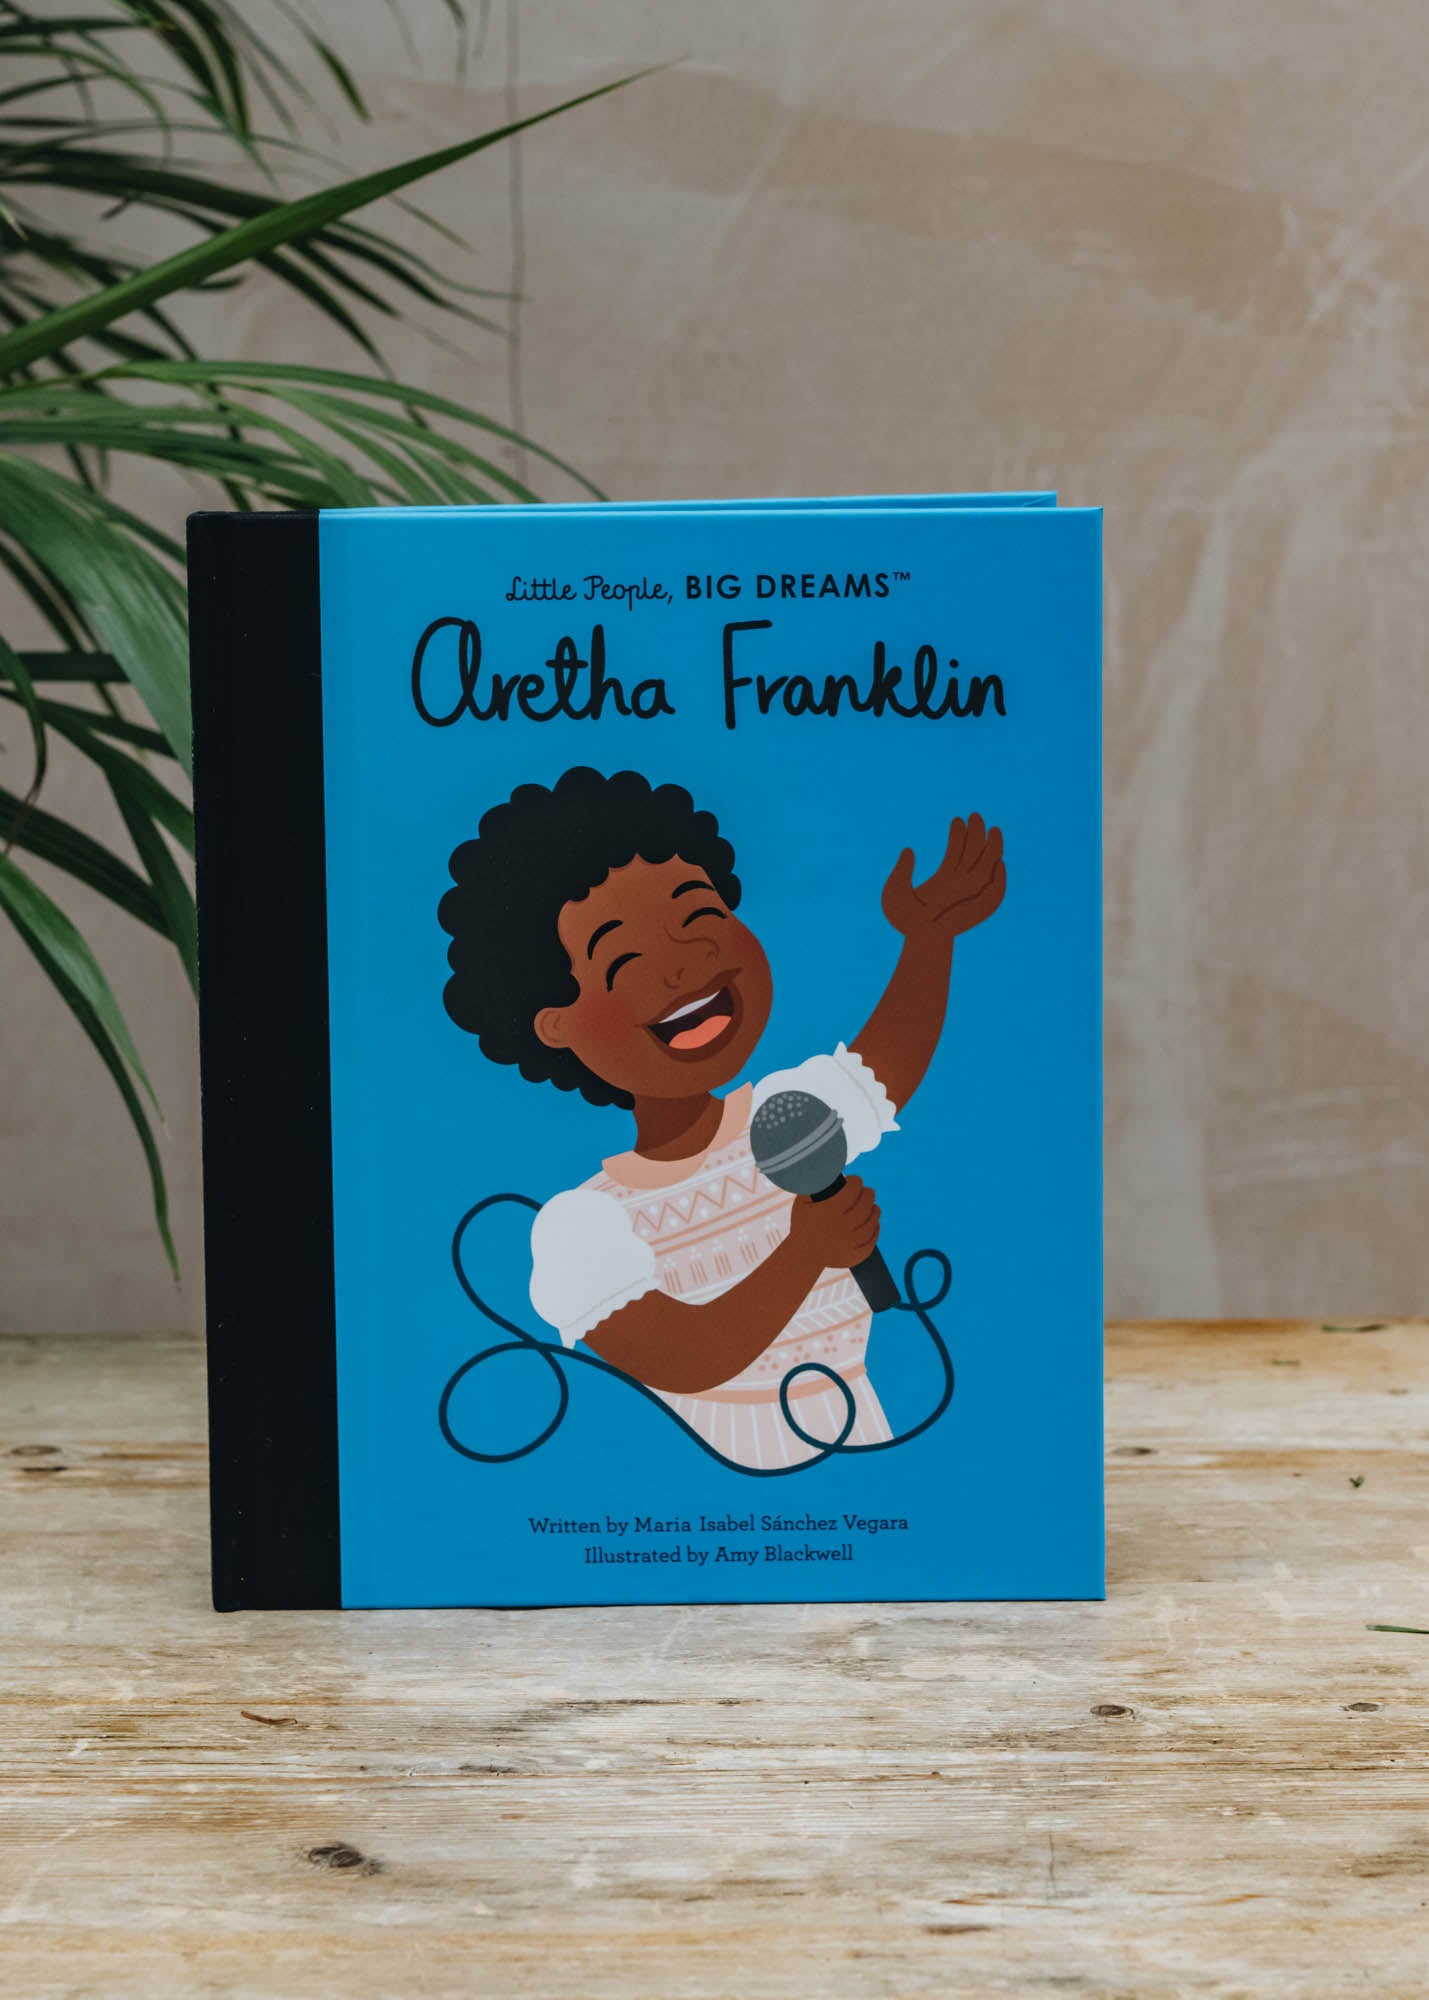 Little People Big Dreams: Aretha Franklin